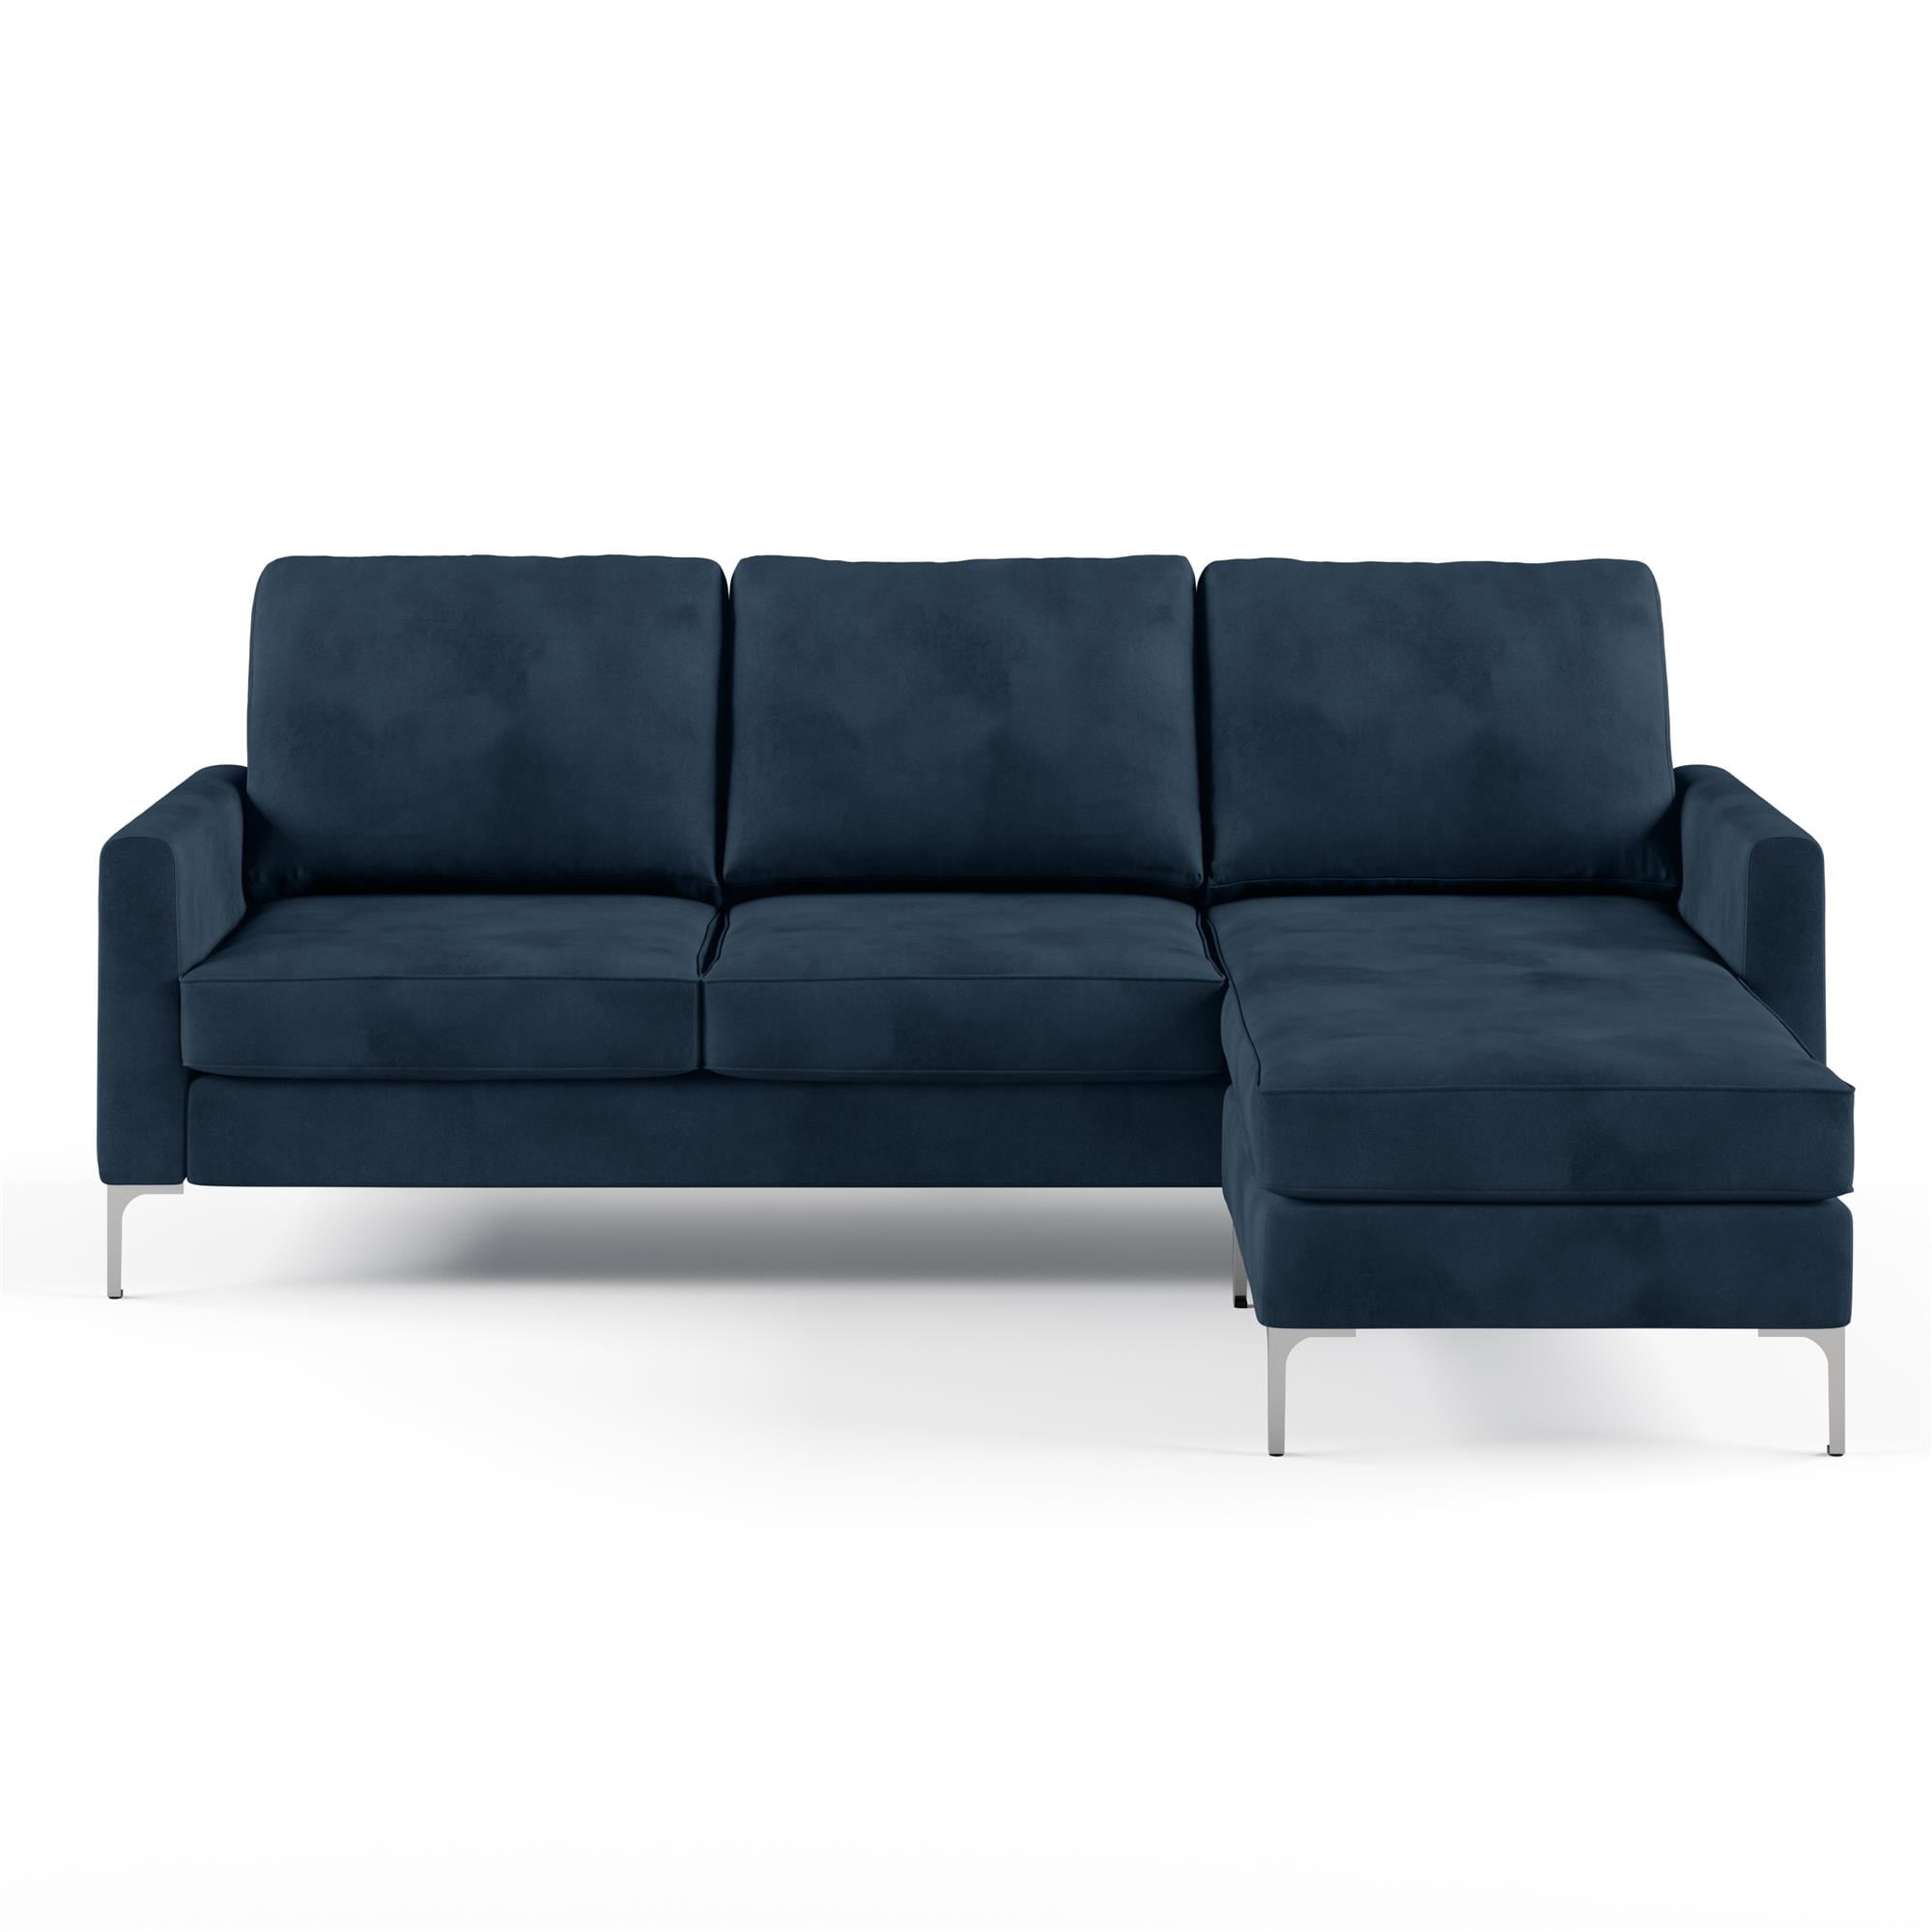 Novogratz Chapman Reversible Sofa and Floating Ottoman with Chrome Metal Legs, Blue Velvet - Walmart.com